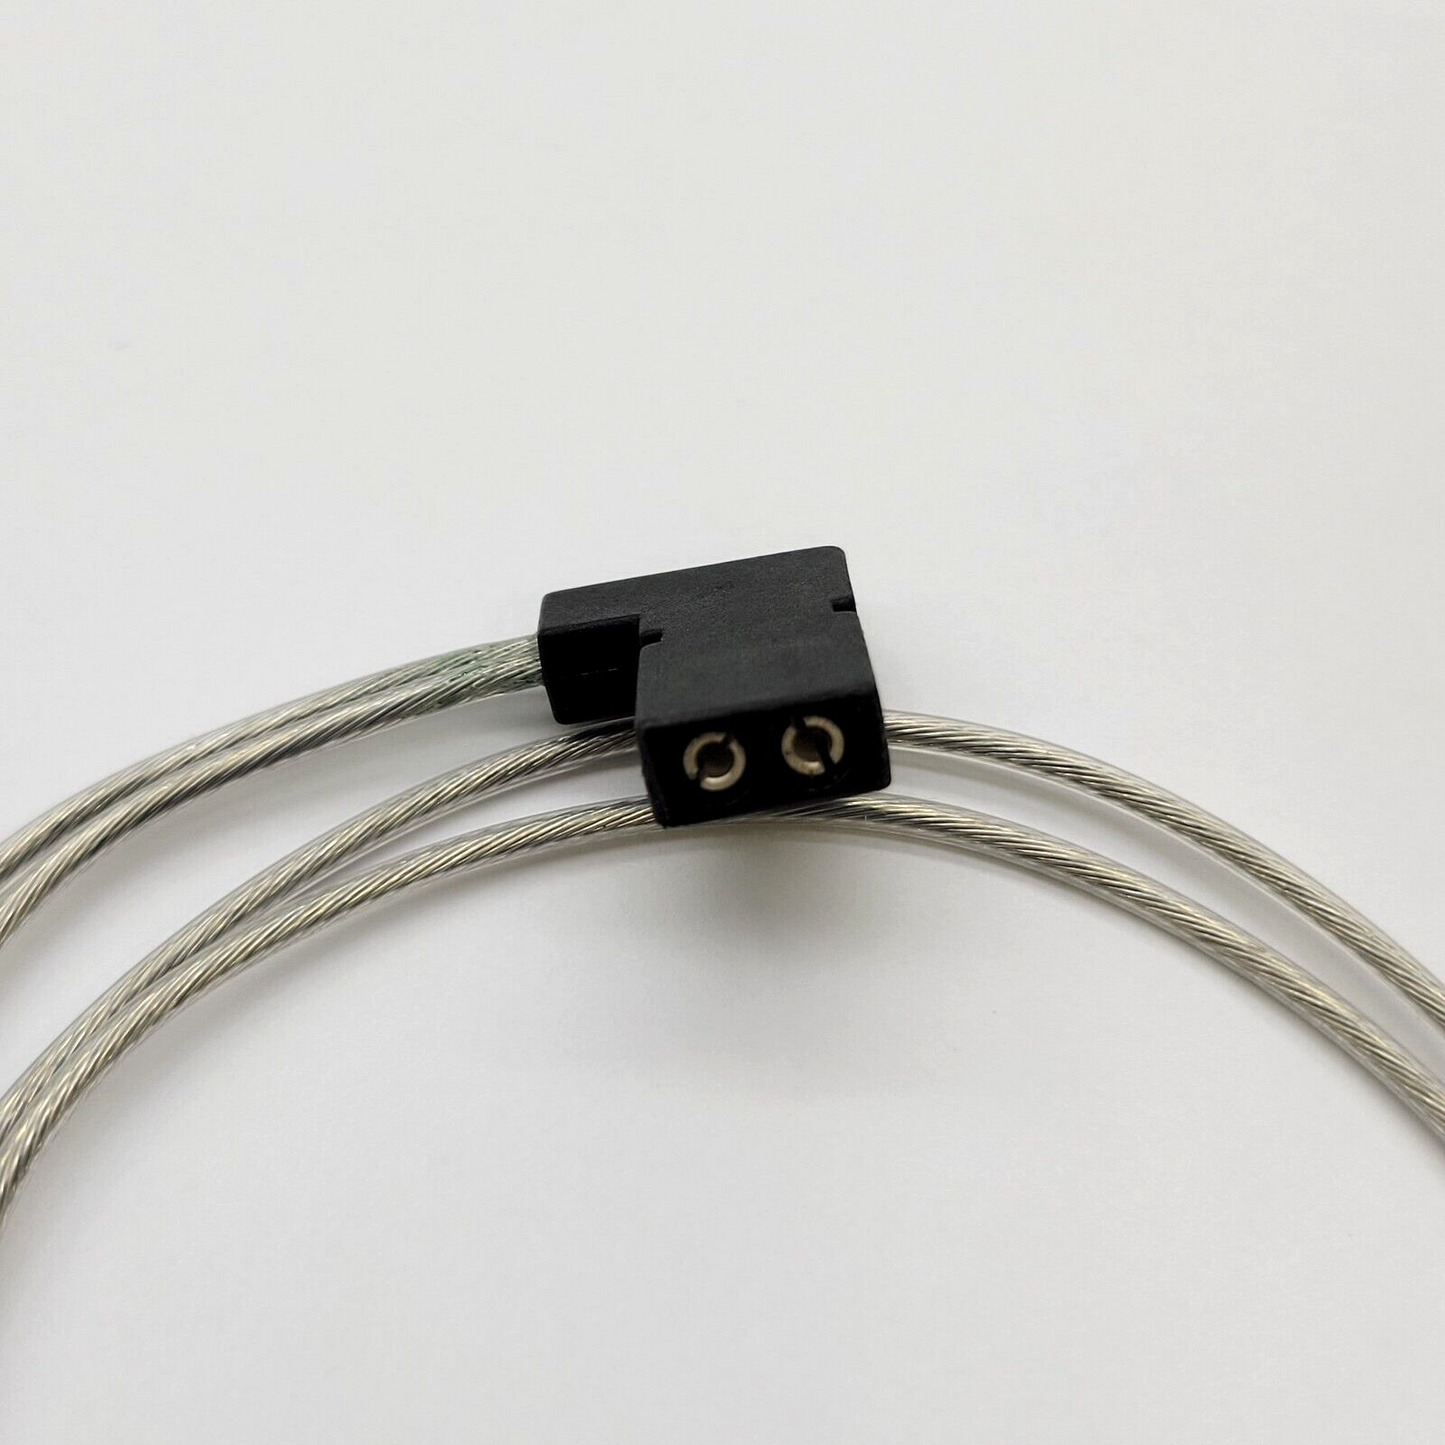 Olympus Microscope Lamp Socket Connector Replacement / Repair Part - microscopemarketplace